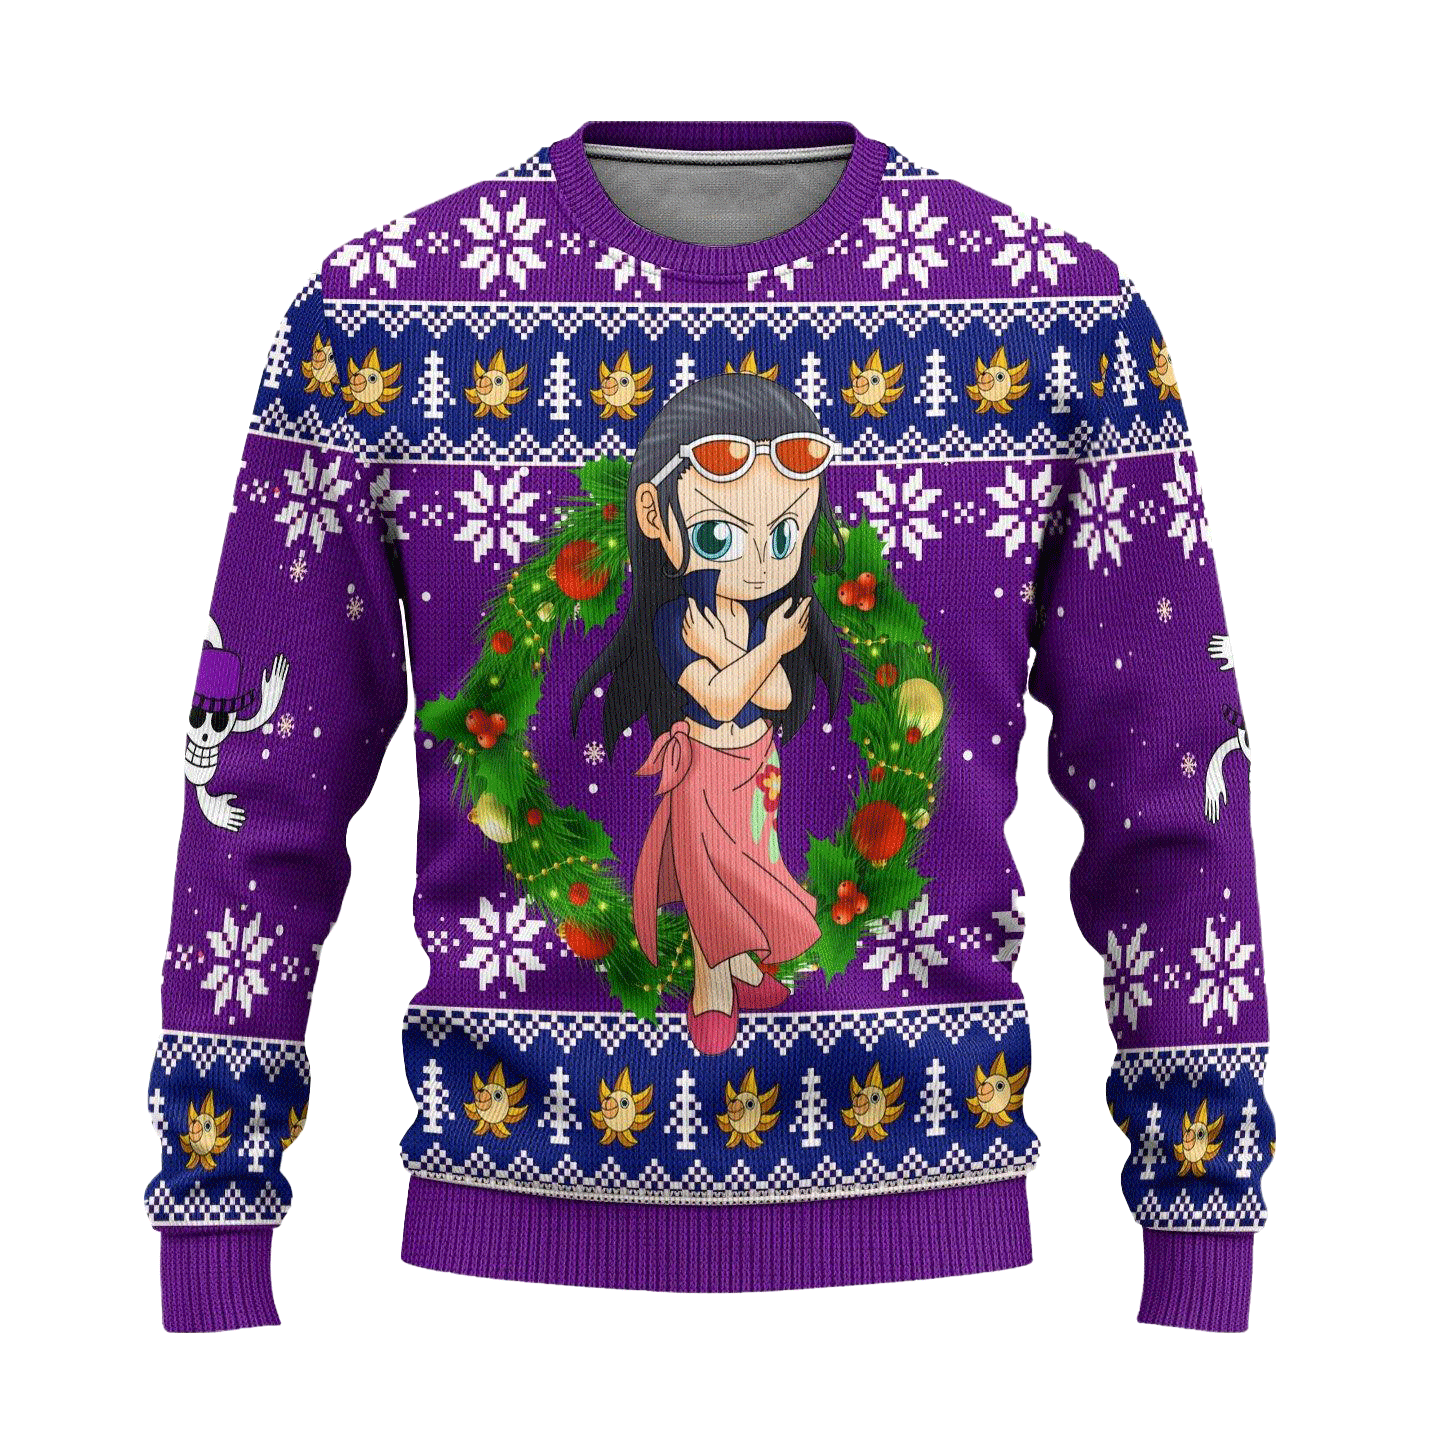 Robin One Piece Anime Ugly Christmas Sweater Xmas Gift